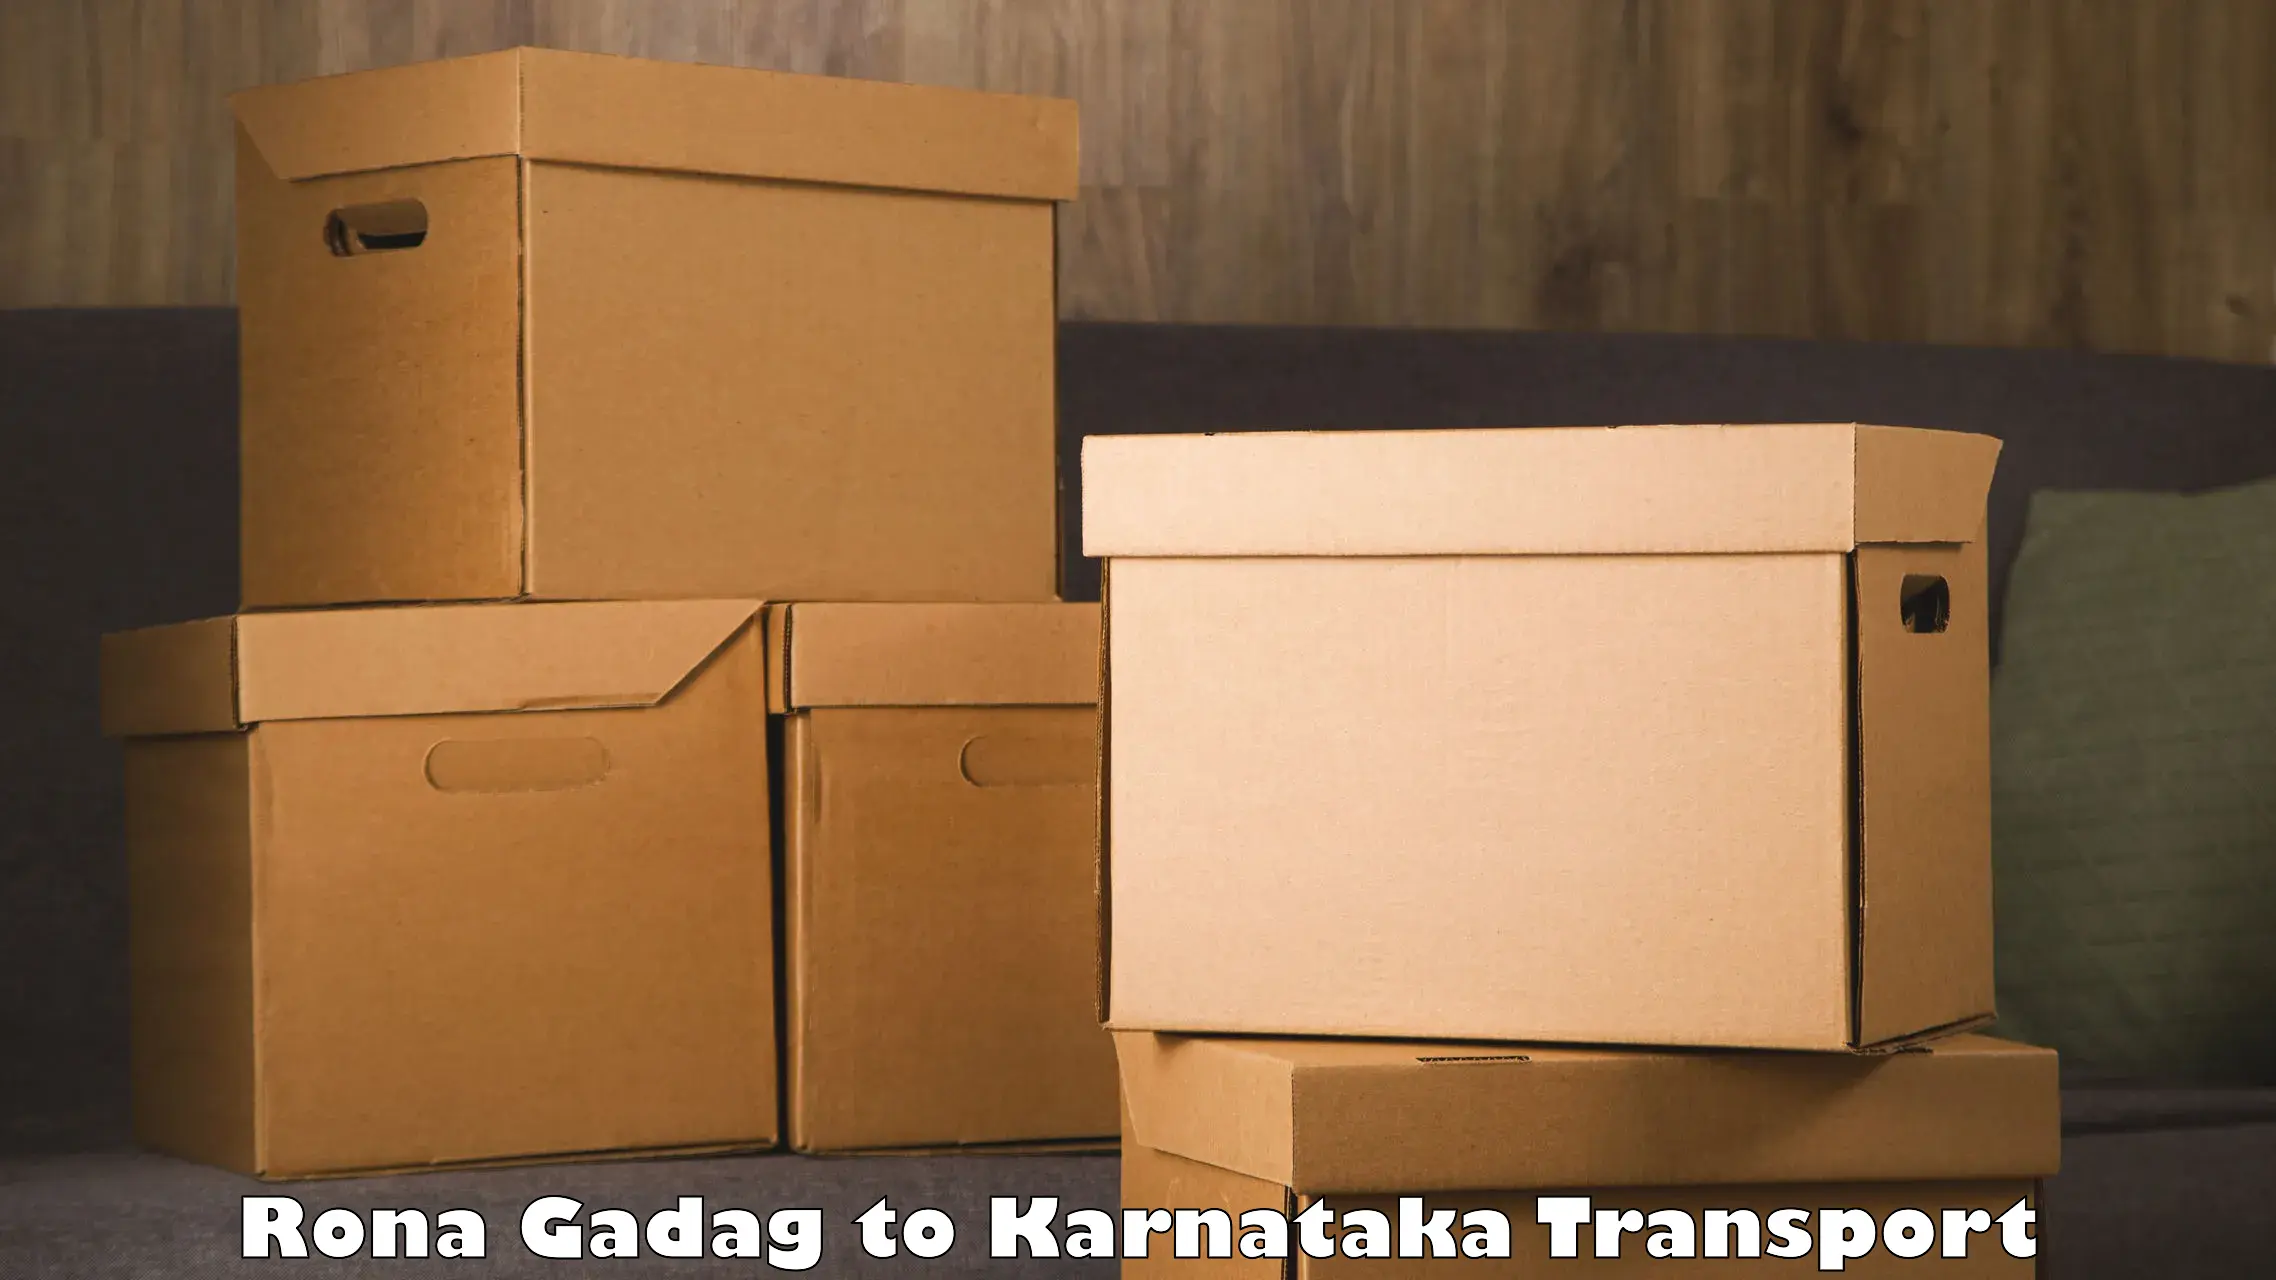 Truck transport companies in India Rona Gadag to Koppal